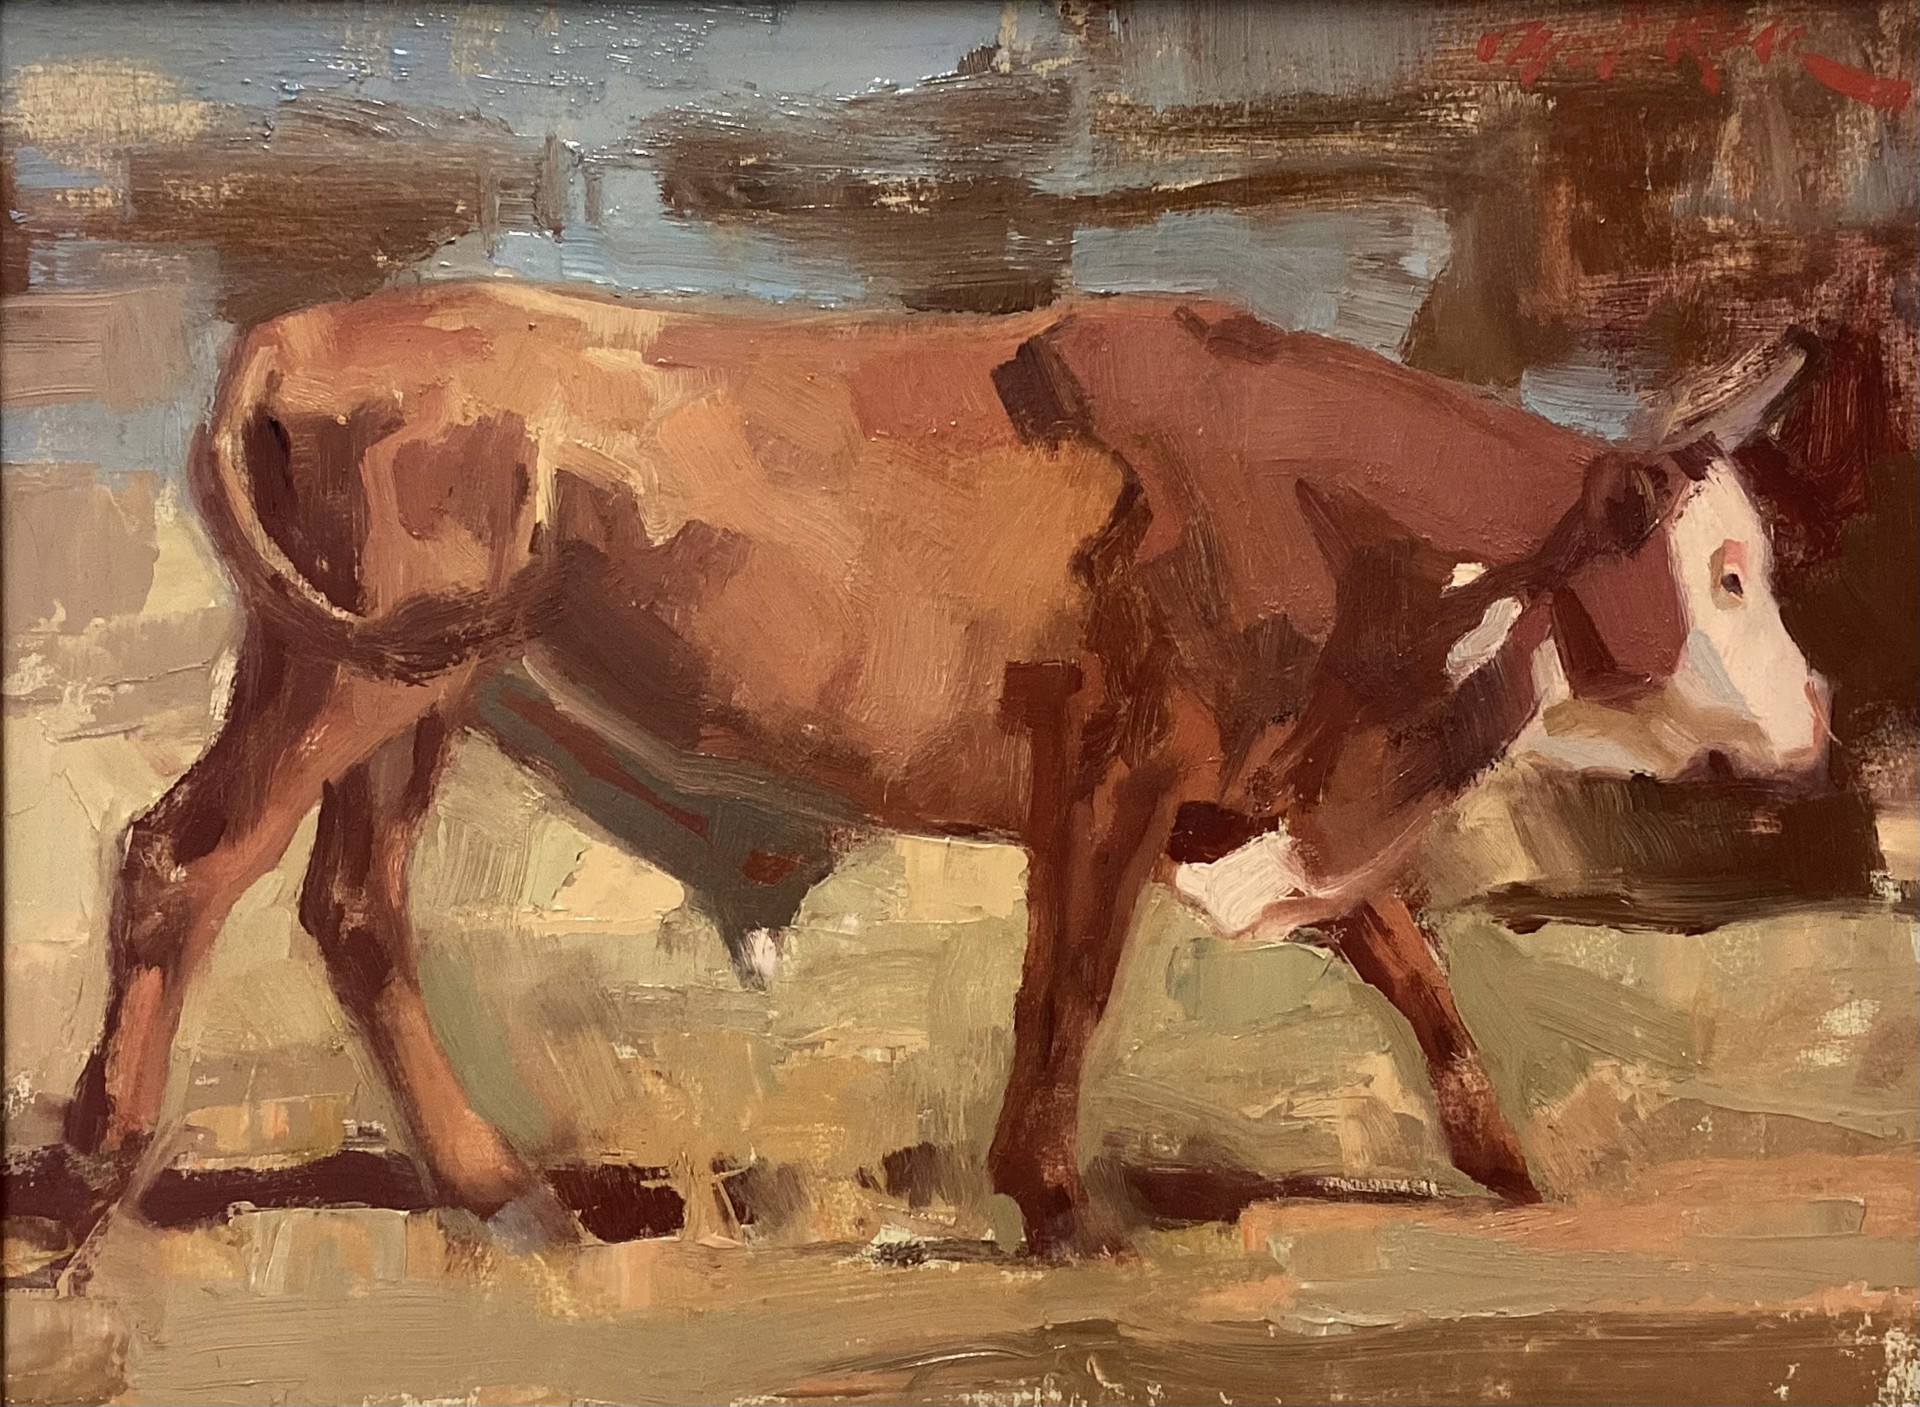 Steer by William F. Reese